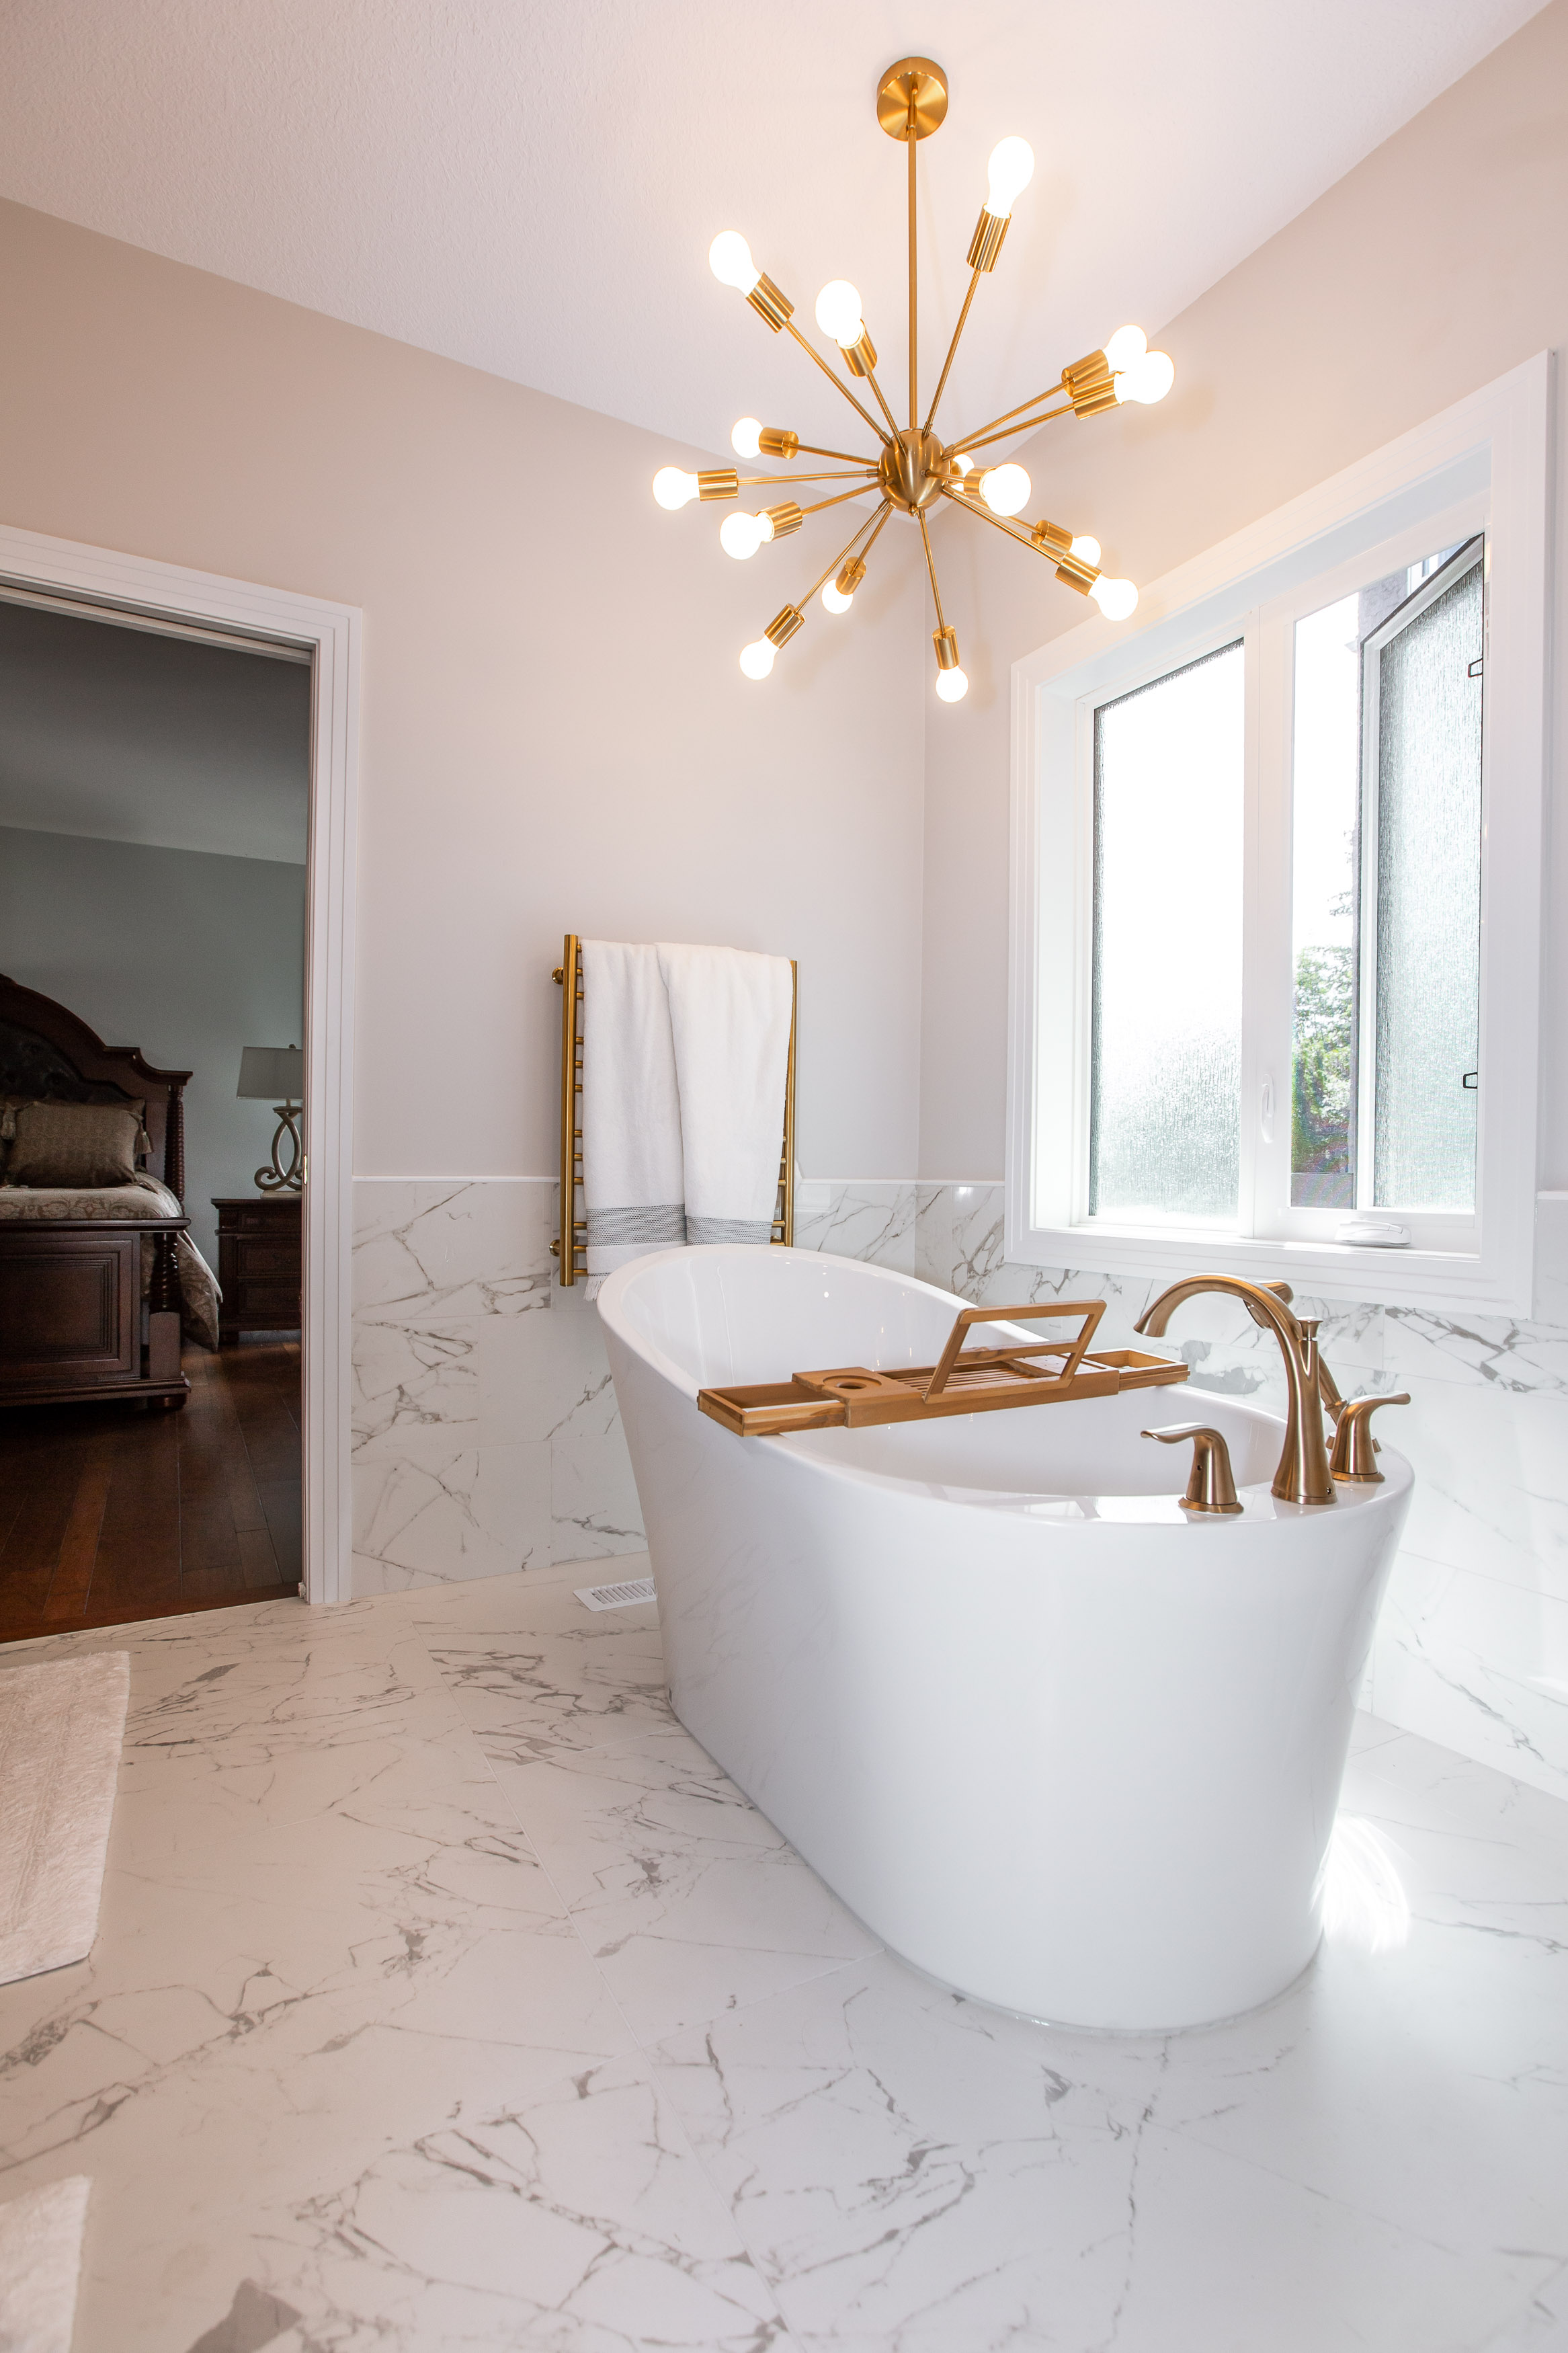 free standing tub, Luxurious En Suite Bathroom Inspiration, Contact Renovations blog